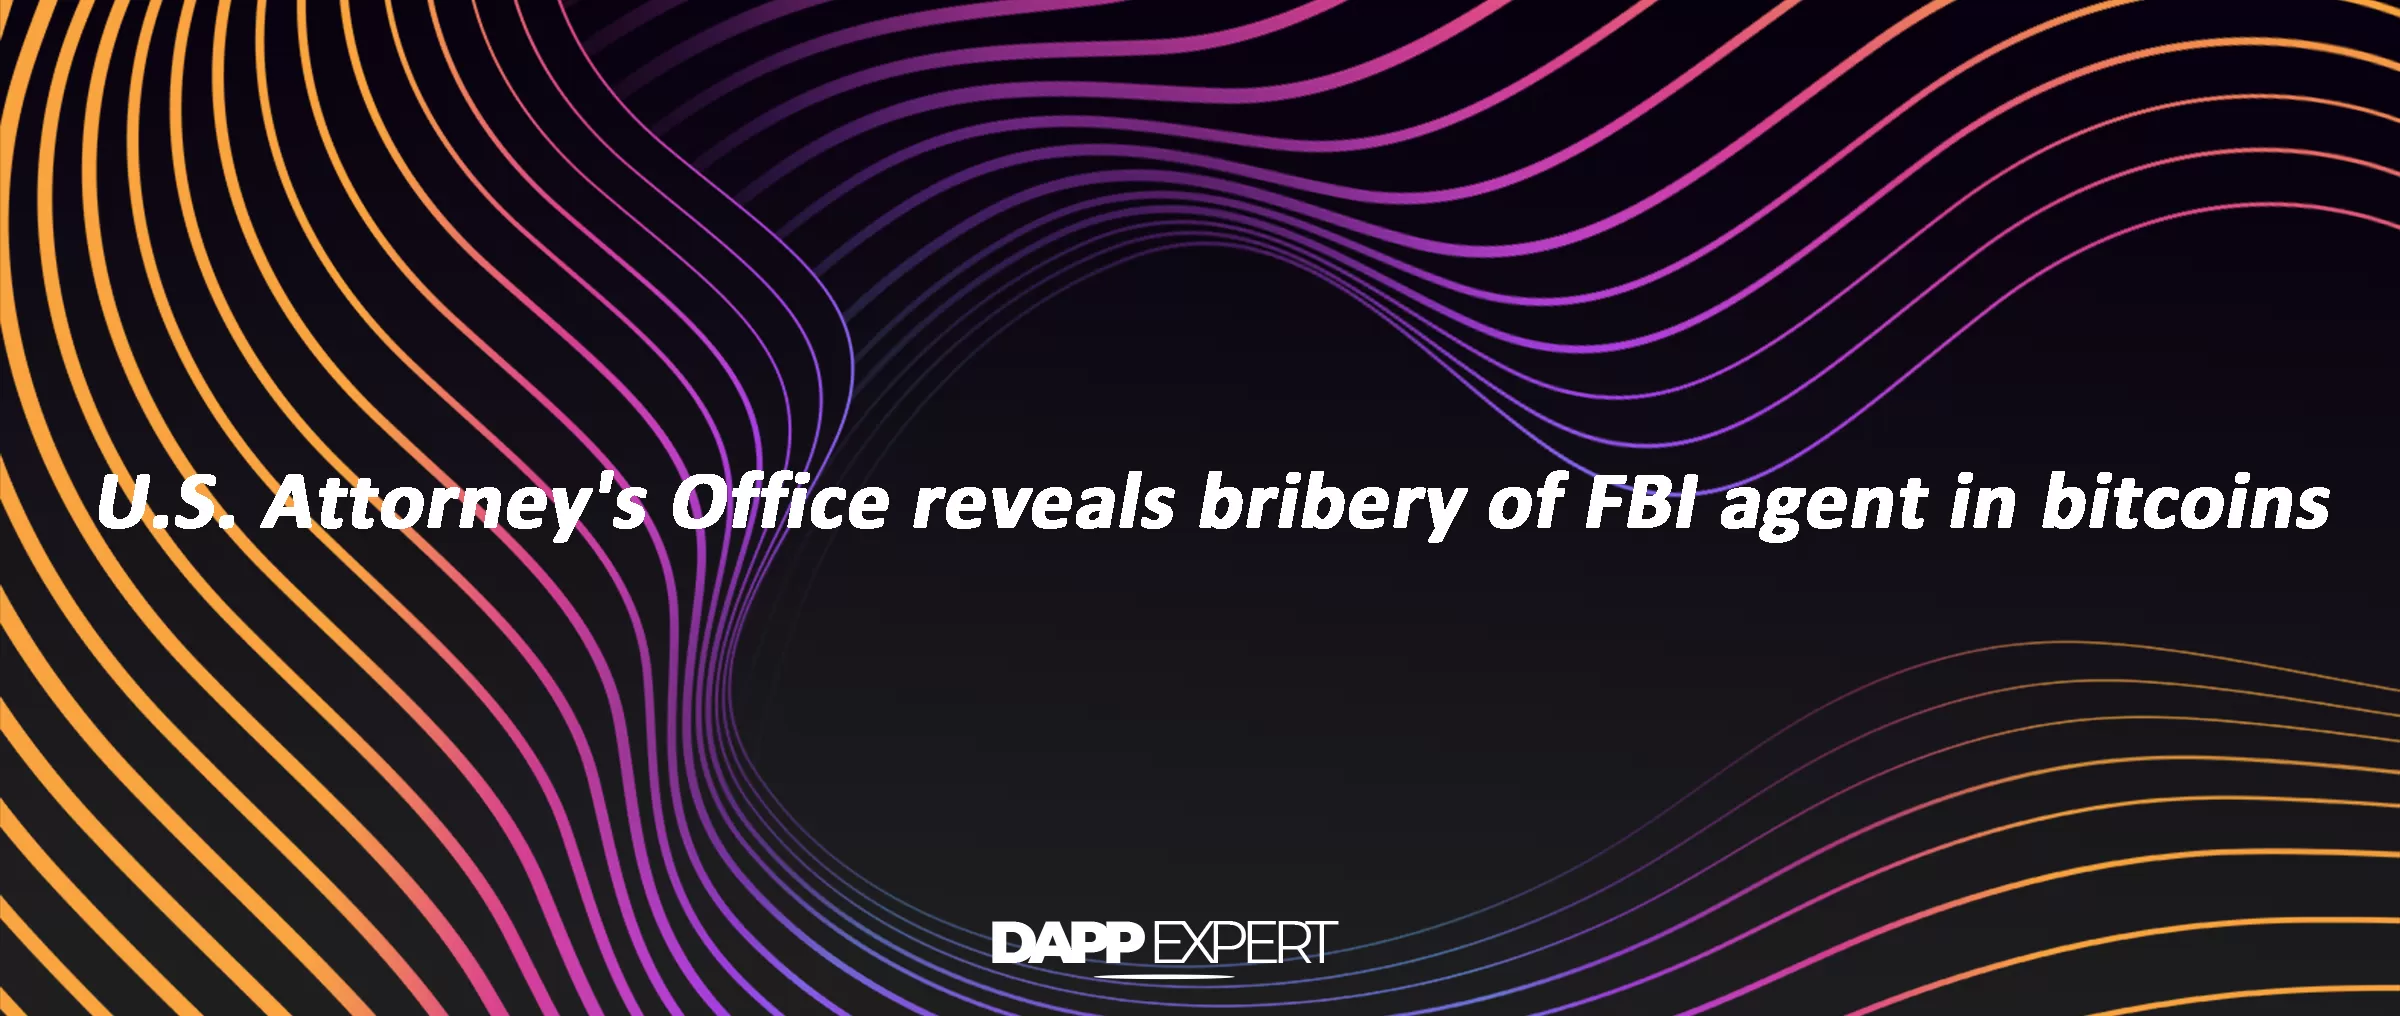 U.S. Attorney's Office reveals bribery of FBI agent in bitcoins